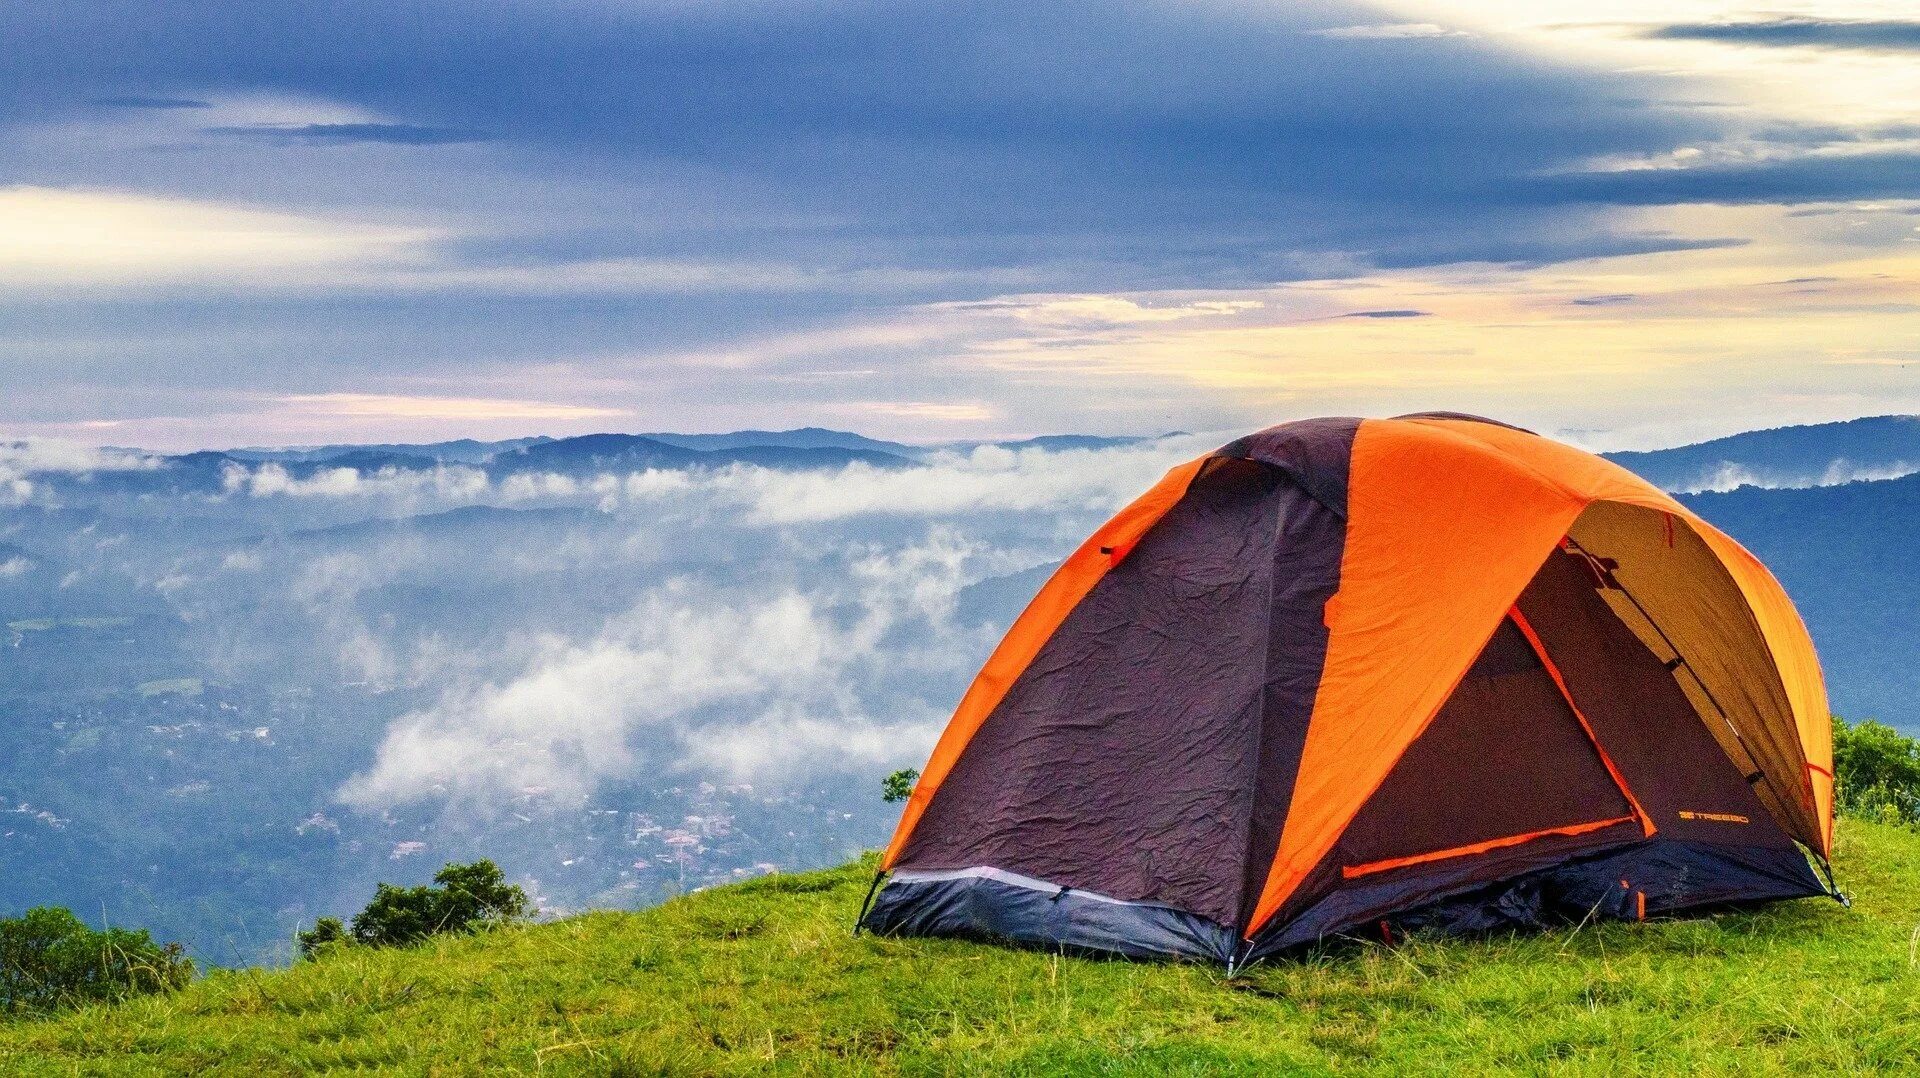 Палатка Camping Tent. Палатка Totem Summer 2 Plus. Миркампинг 2022 палатка. Палатка туристическая Outdoor Tent. Outdoor camp